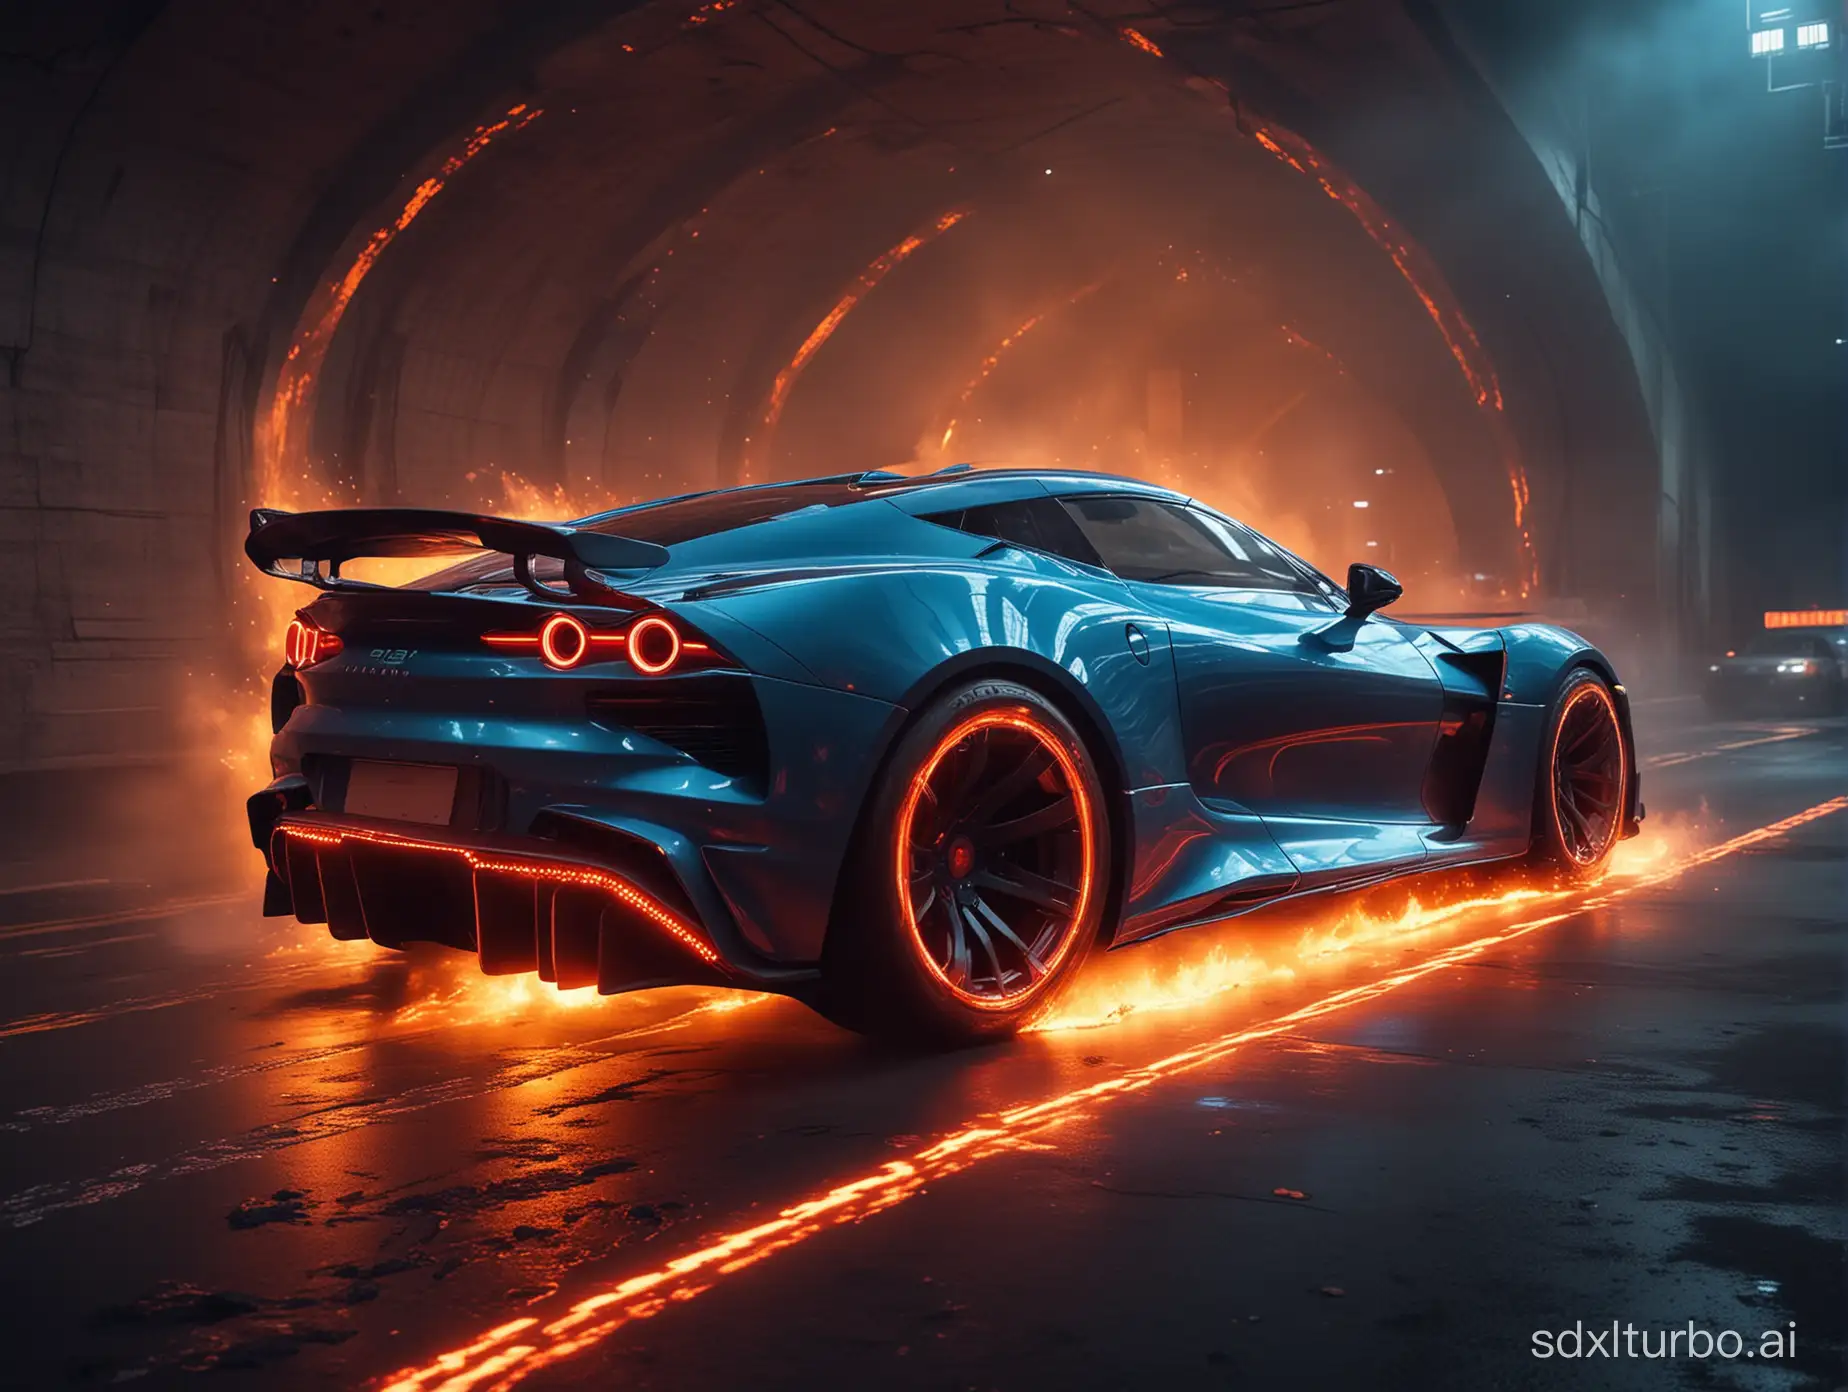 Futuristic-Neon-Tunnel-Speedster-SciFi-Car-Racing-Through-FlameLit-Passage